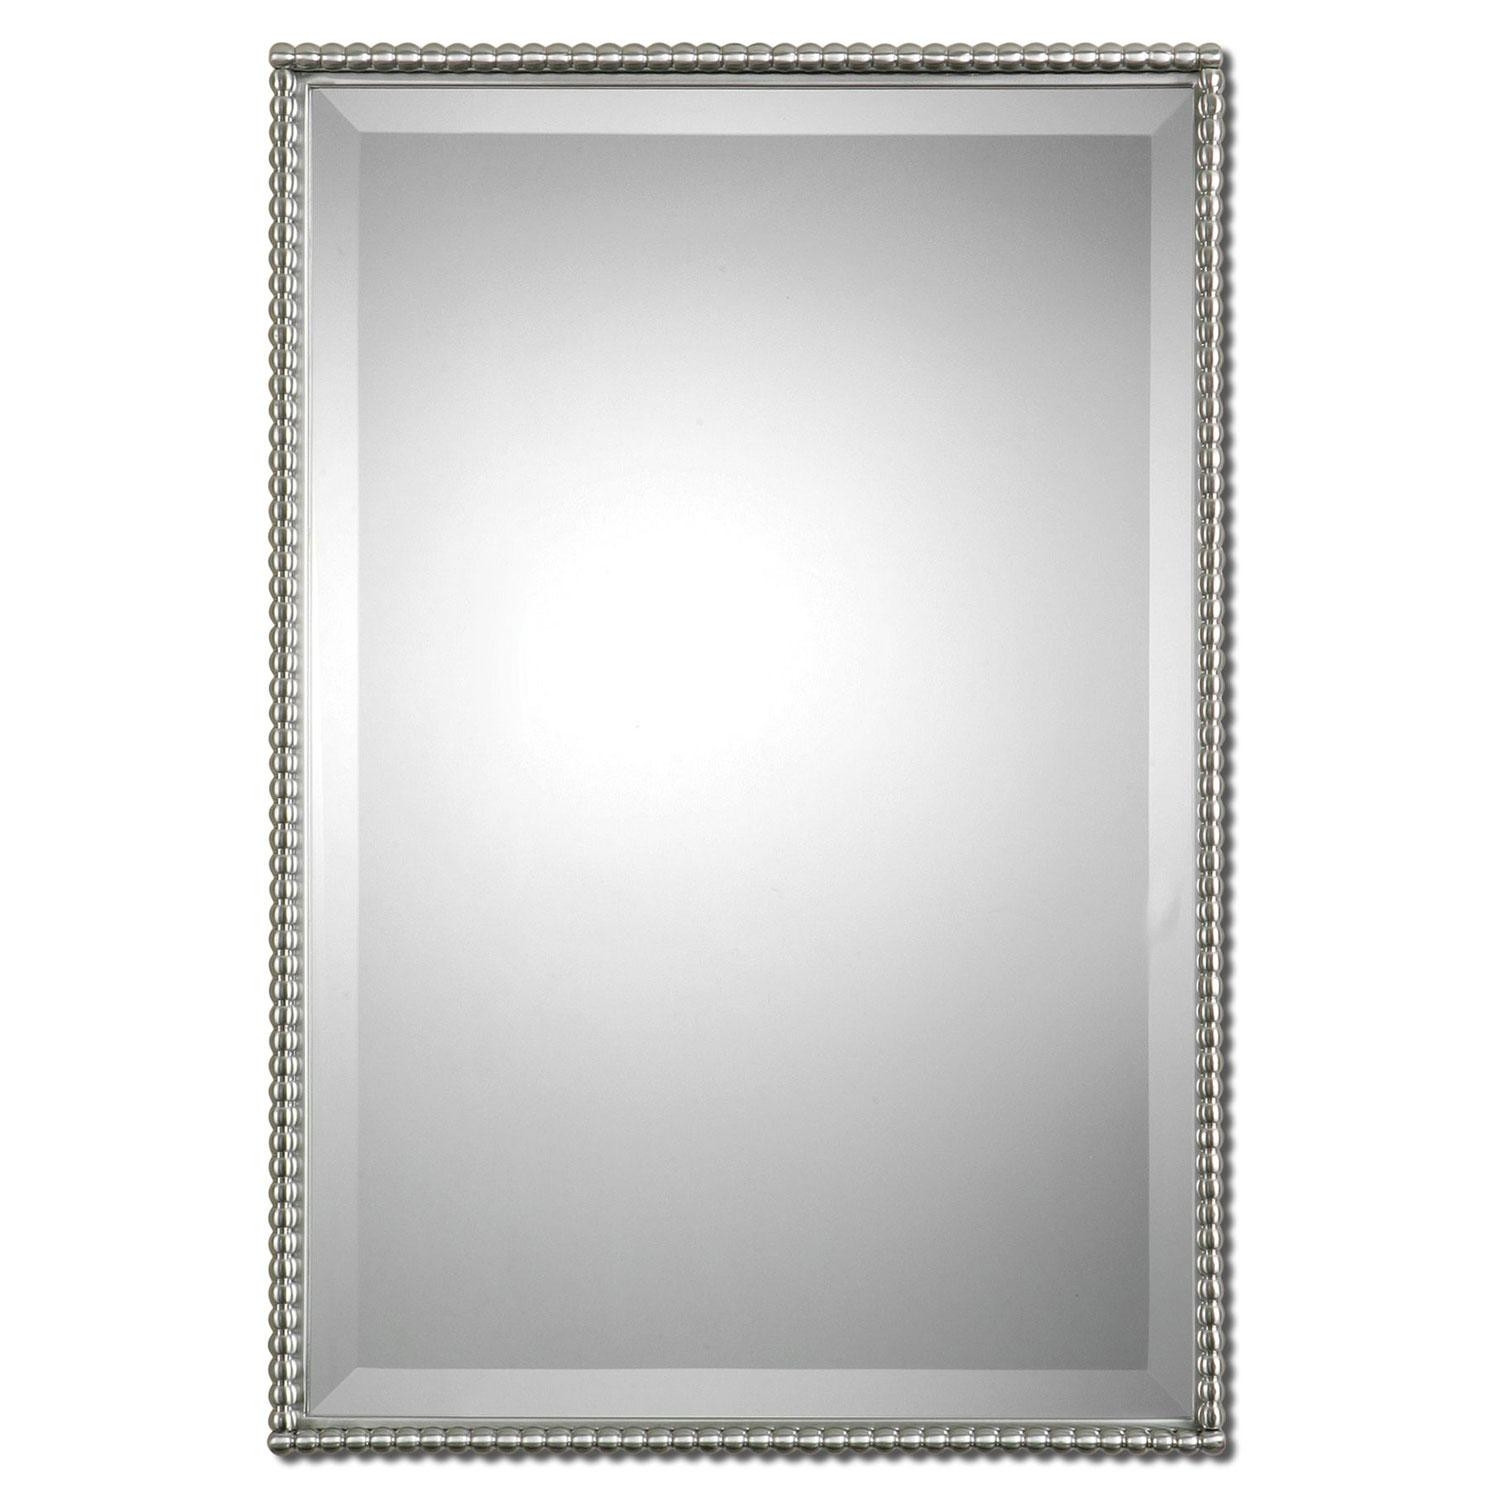 Brushed Nickel Bathroom Mirrors
 20 Best Long Rectangular Mirrors